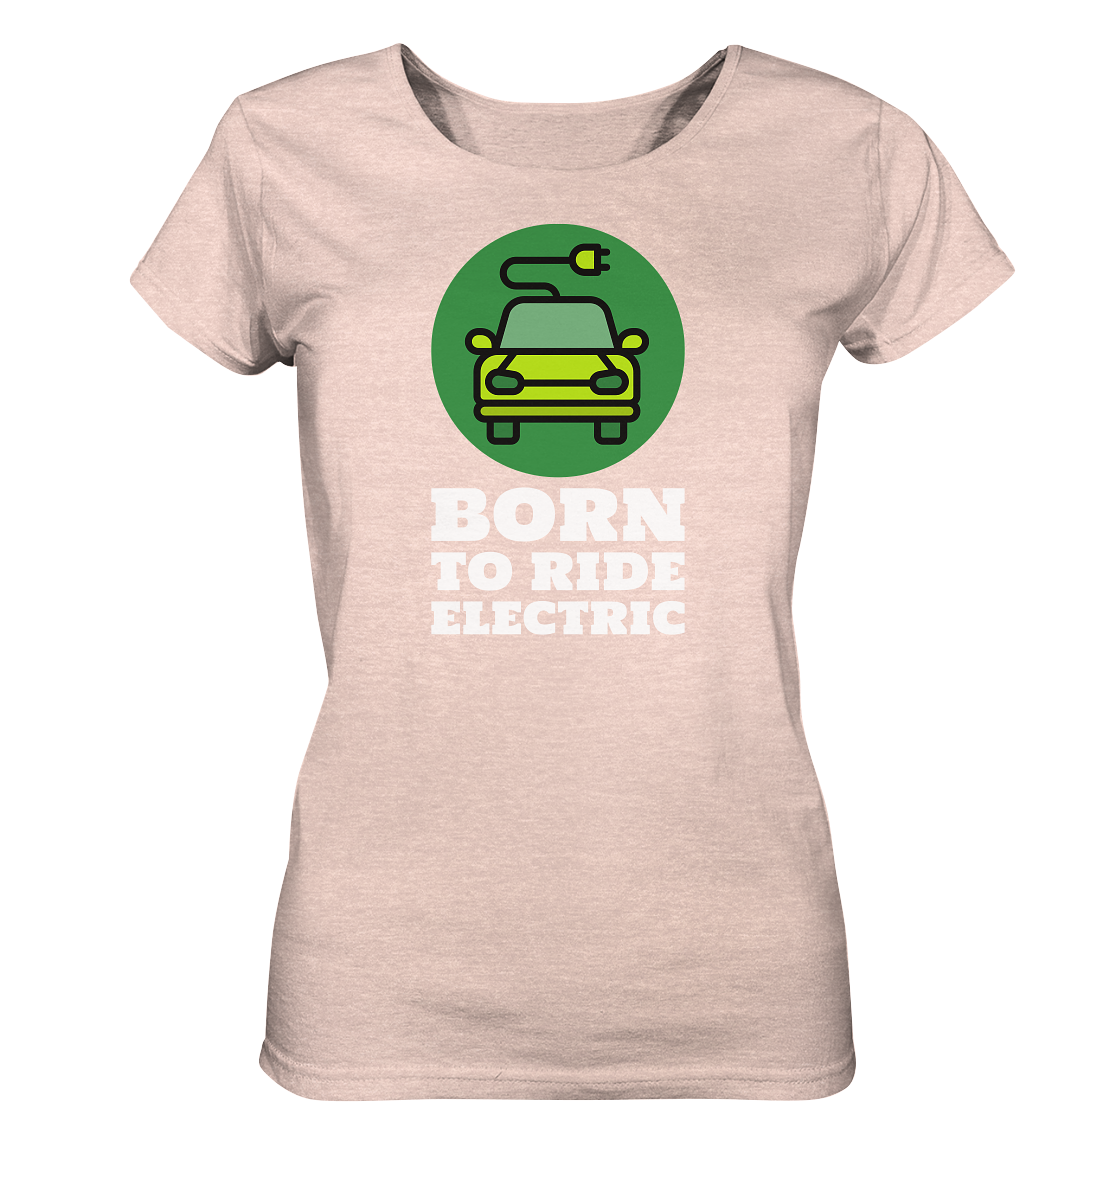 Born to ride electric ORGANIC - Ladies Organic Shirt (meliert)